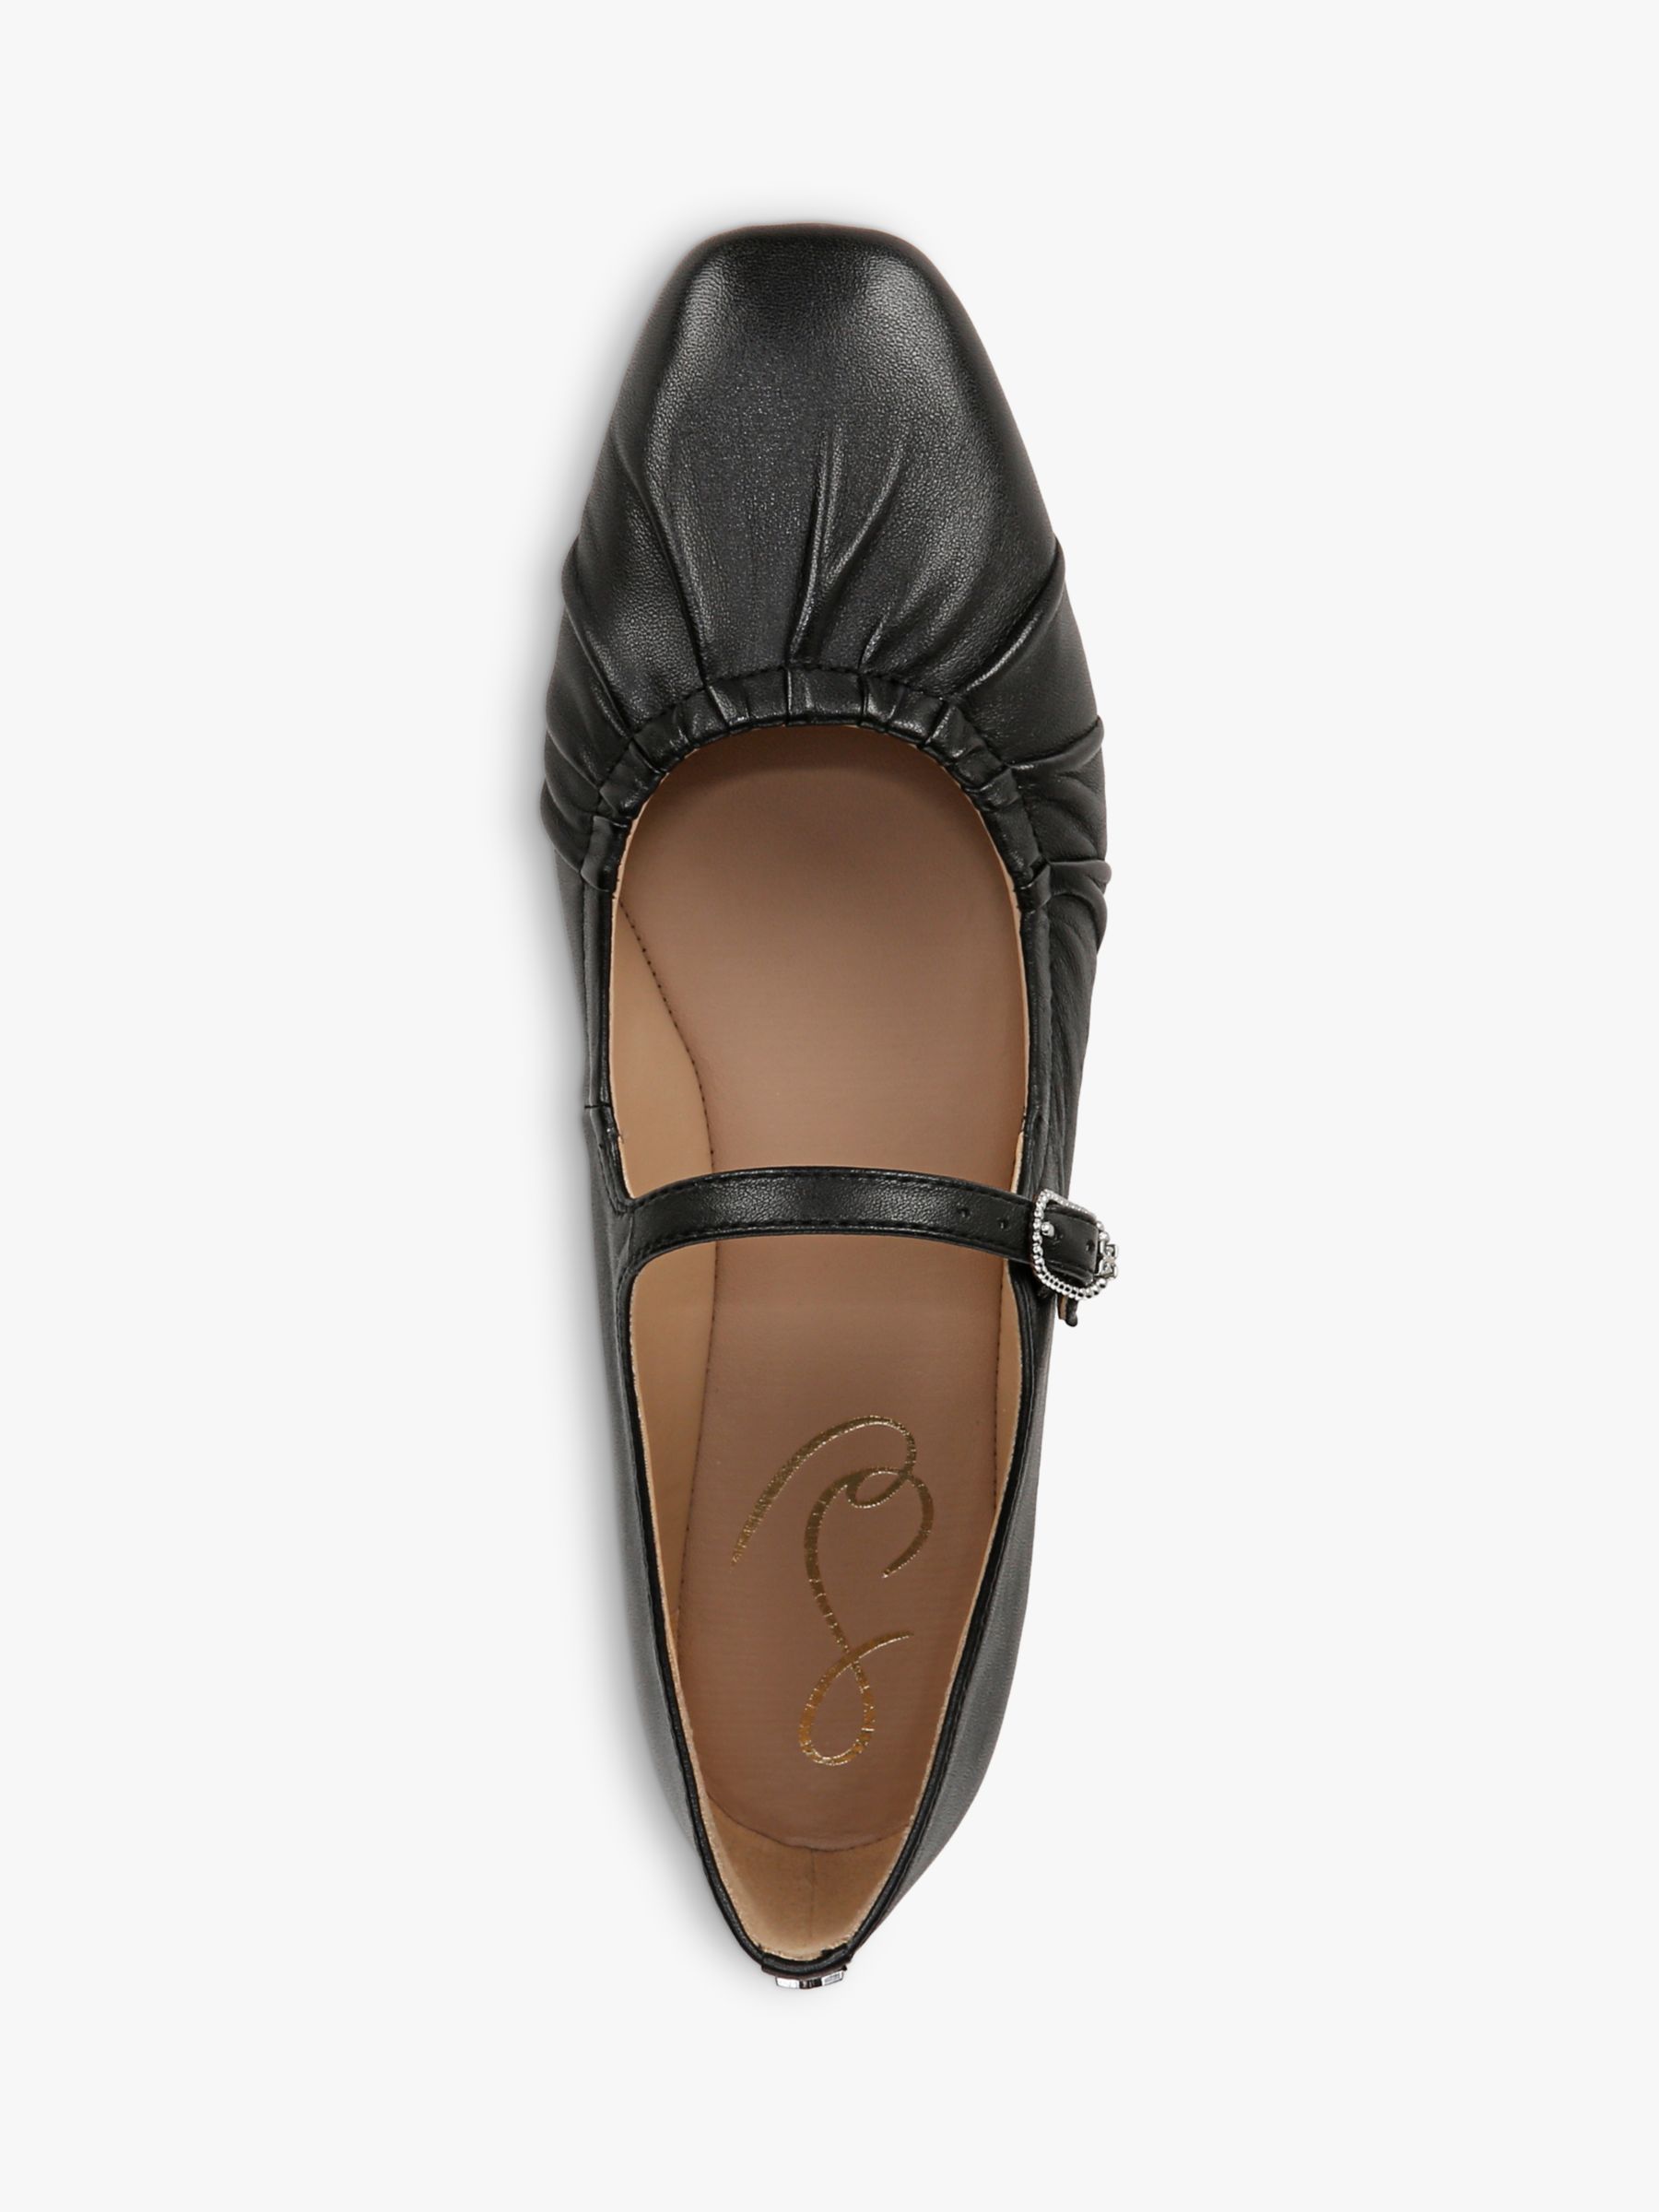 Sam Edelman Micah Leather Mary Jane Shoes, Black at John Lewis & Partners